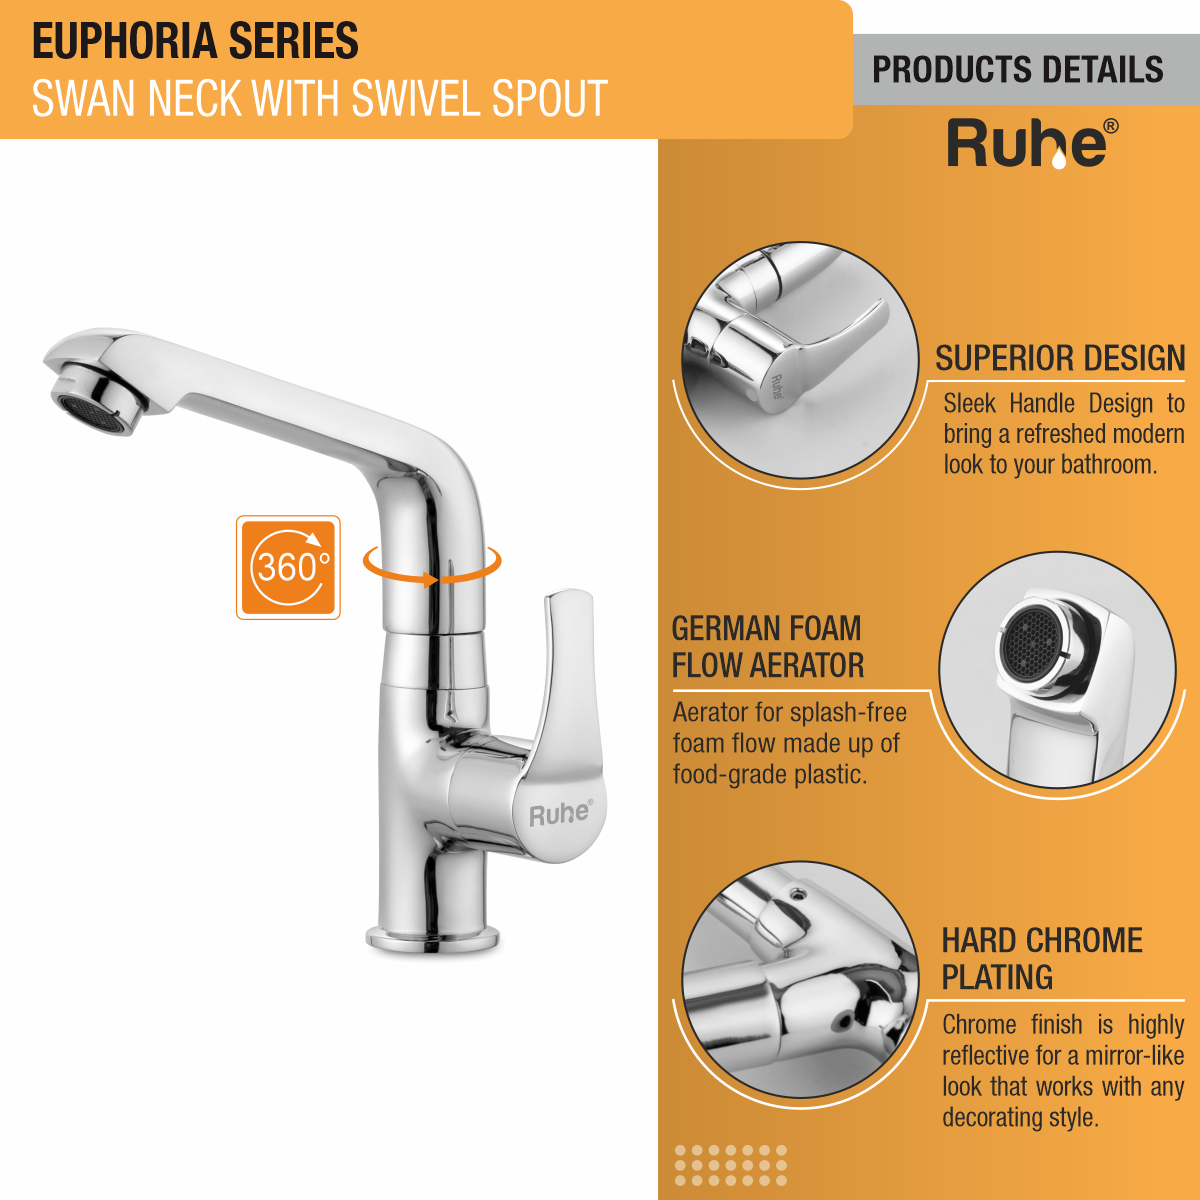 Euphoria Swan Neck With Swivel Spout Faucet product details